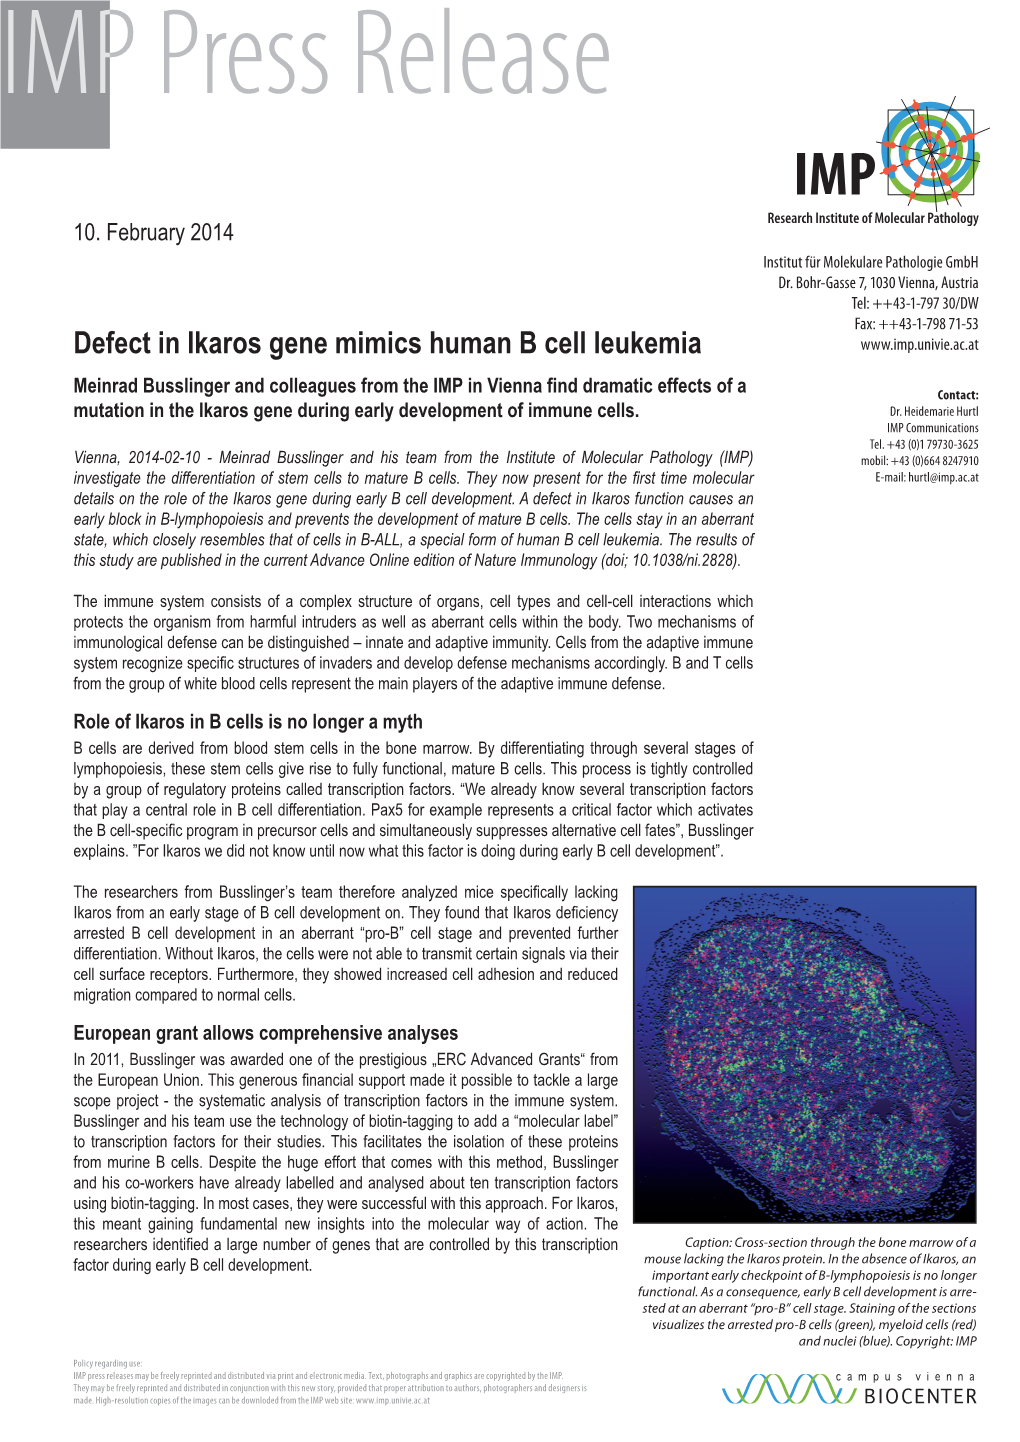 Defect in Ikaros Gene Mimics Human B Cell Leukemia